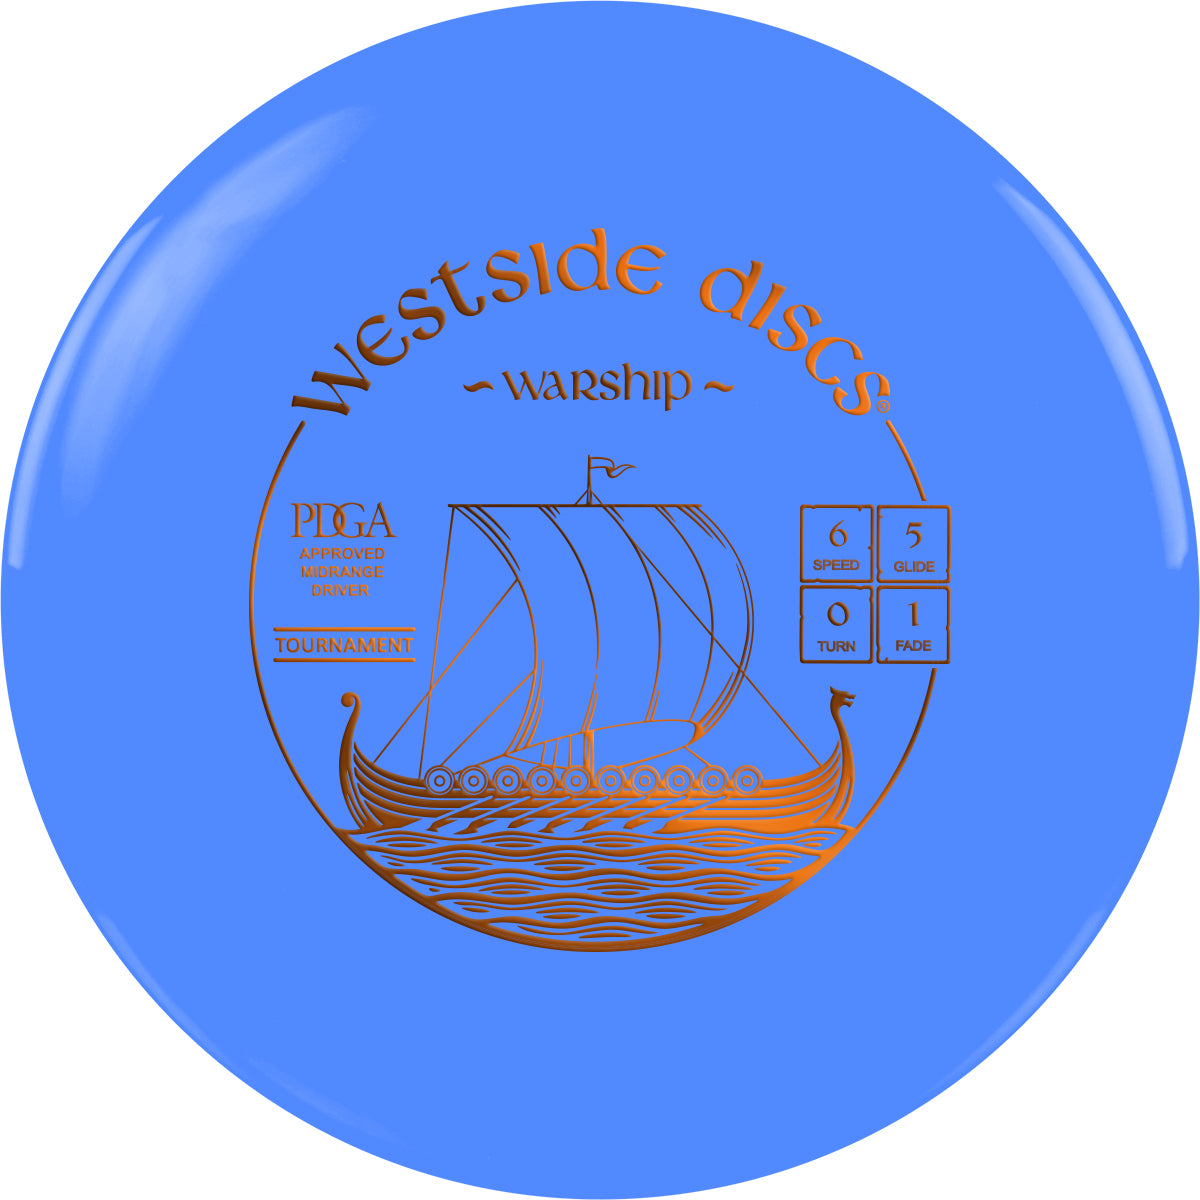 Westside Warship